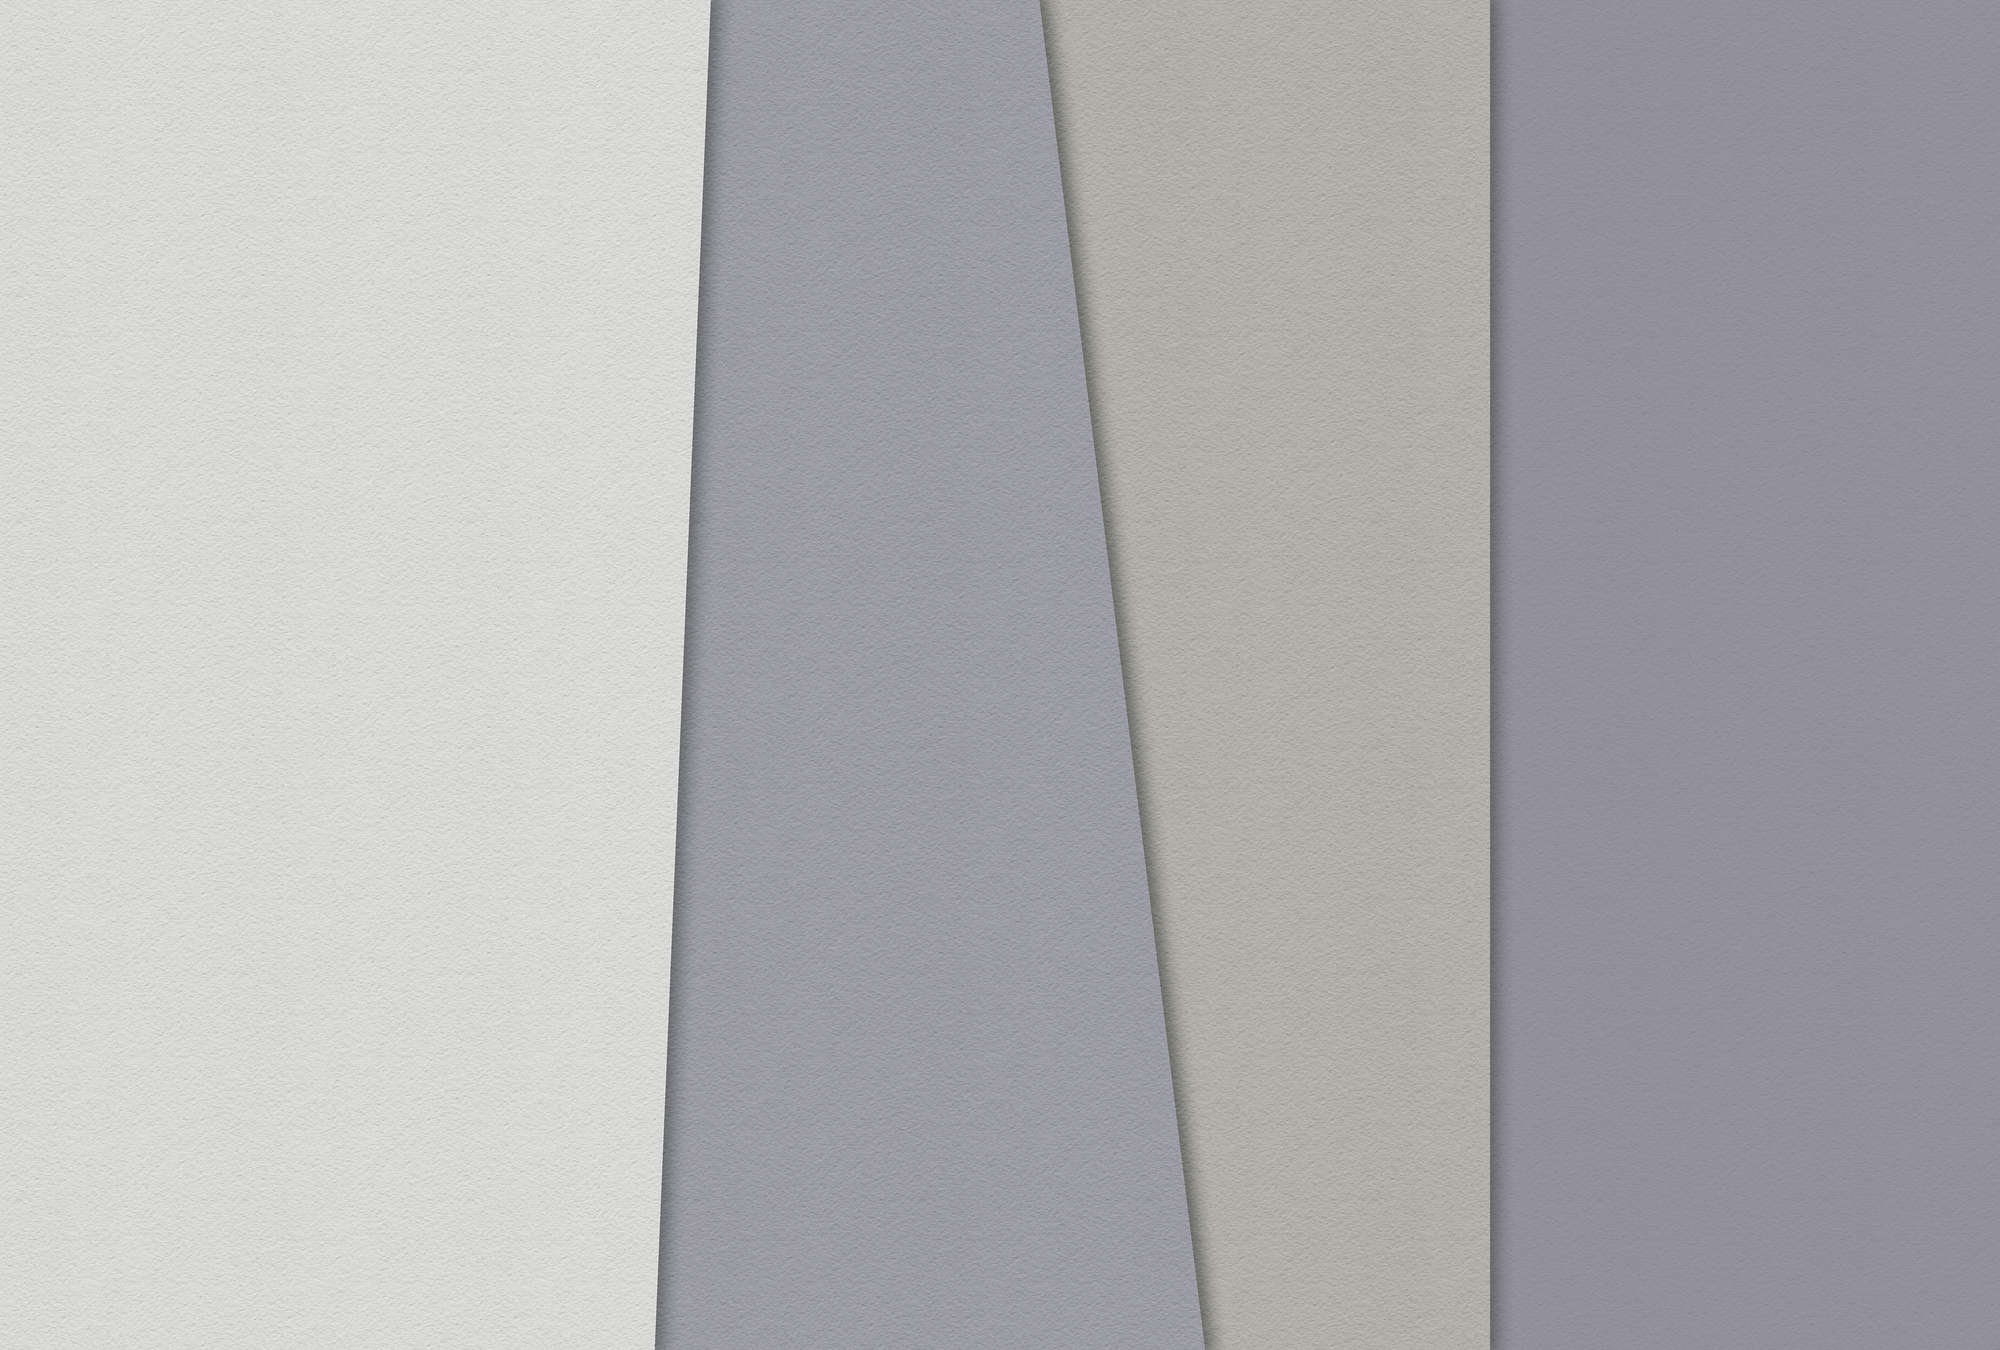             Layered paper 2 - Graphic Wallpaper, Handmade Paper Texture Minimalist Design - Cream, Green | Premium Smooth Non-woven
        